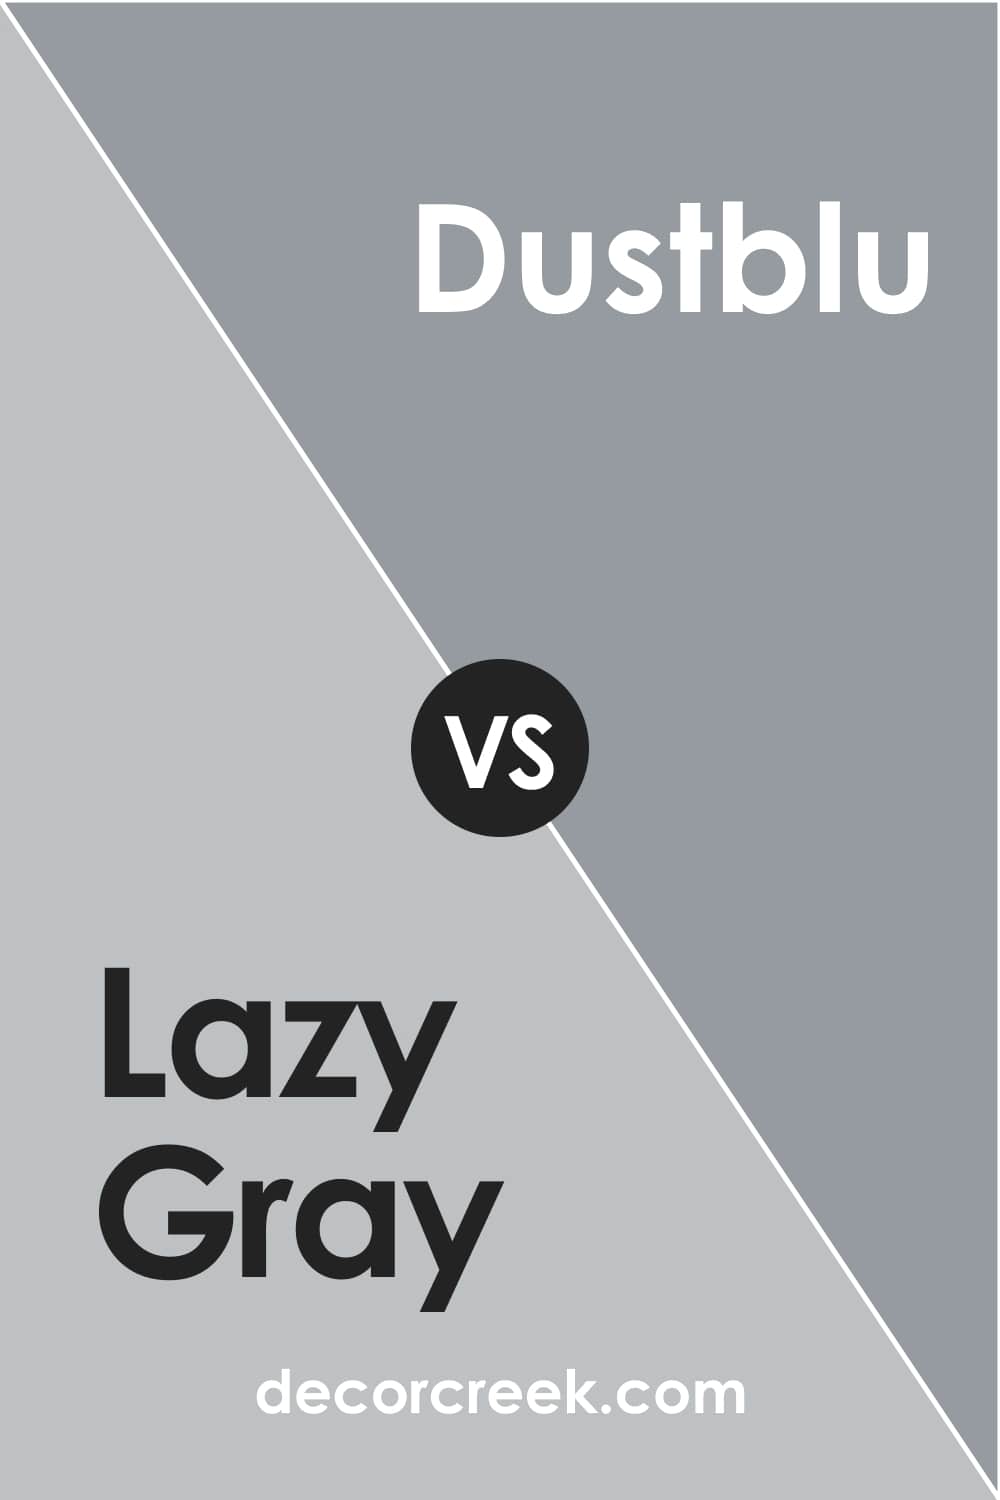 Lazy Gray vs. Dustblu